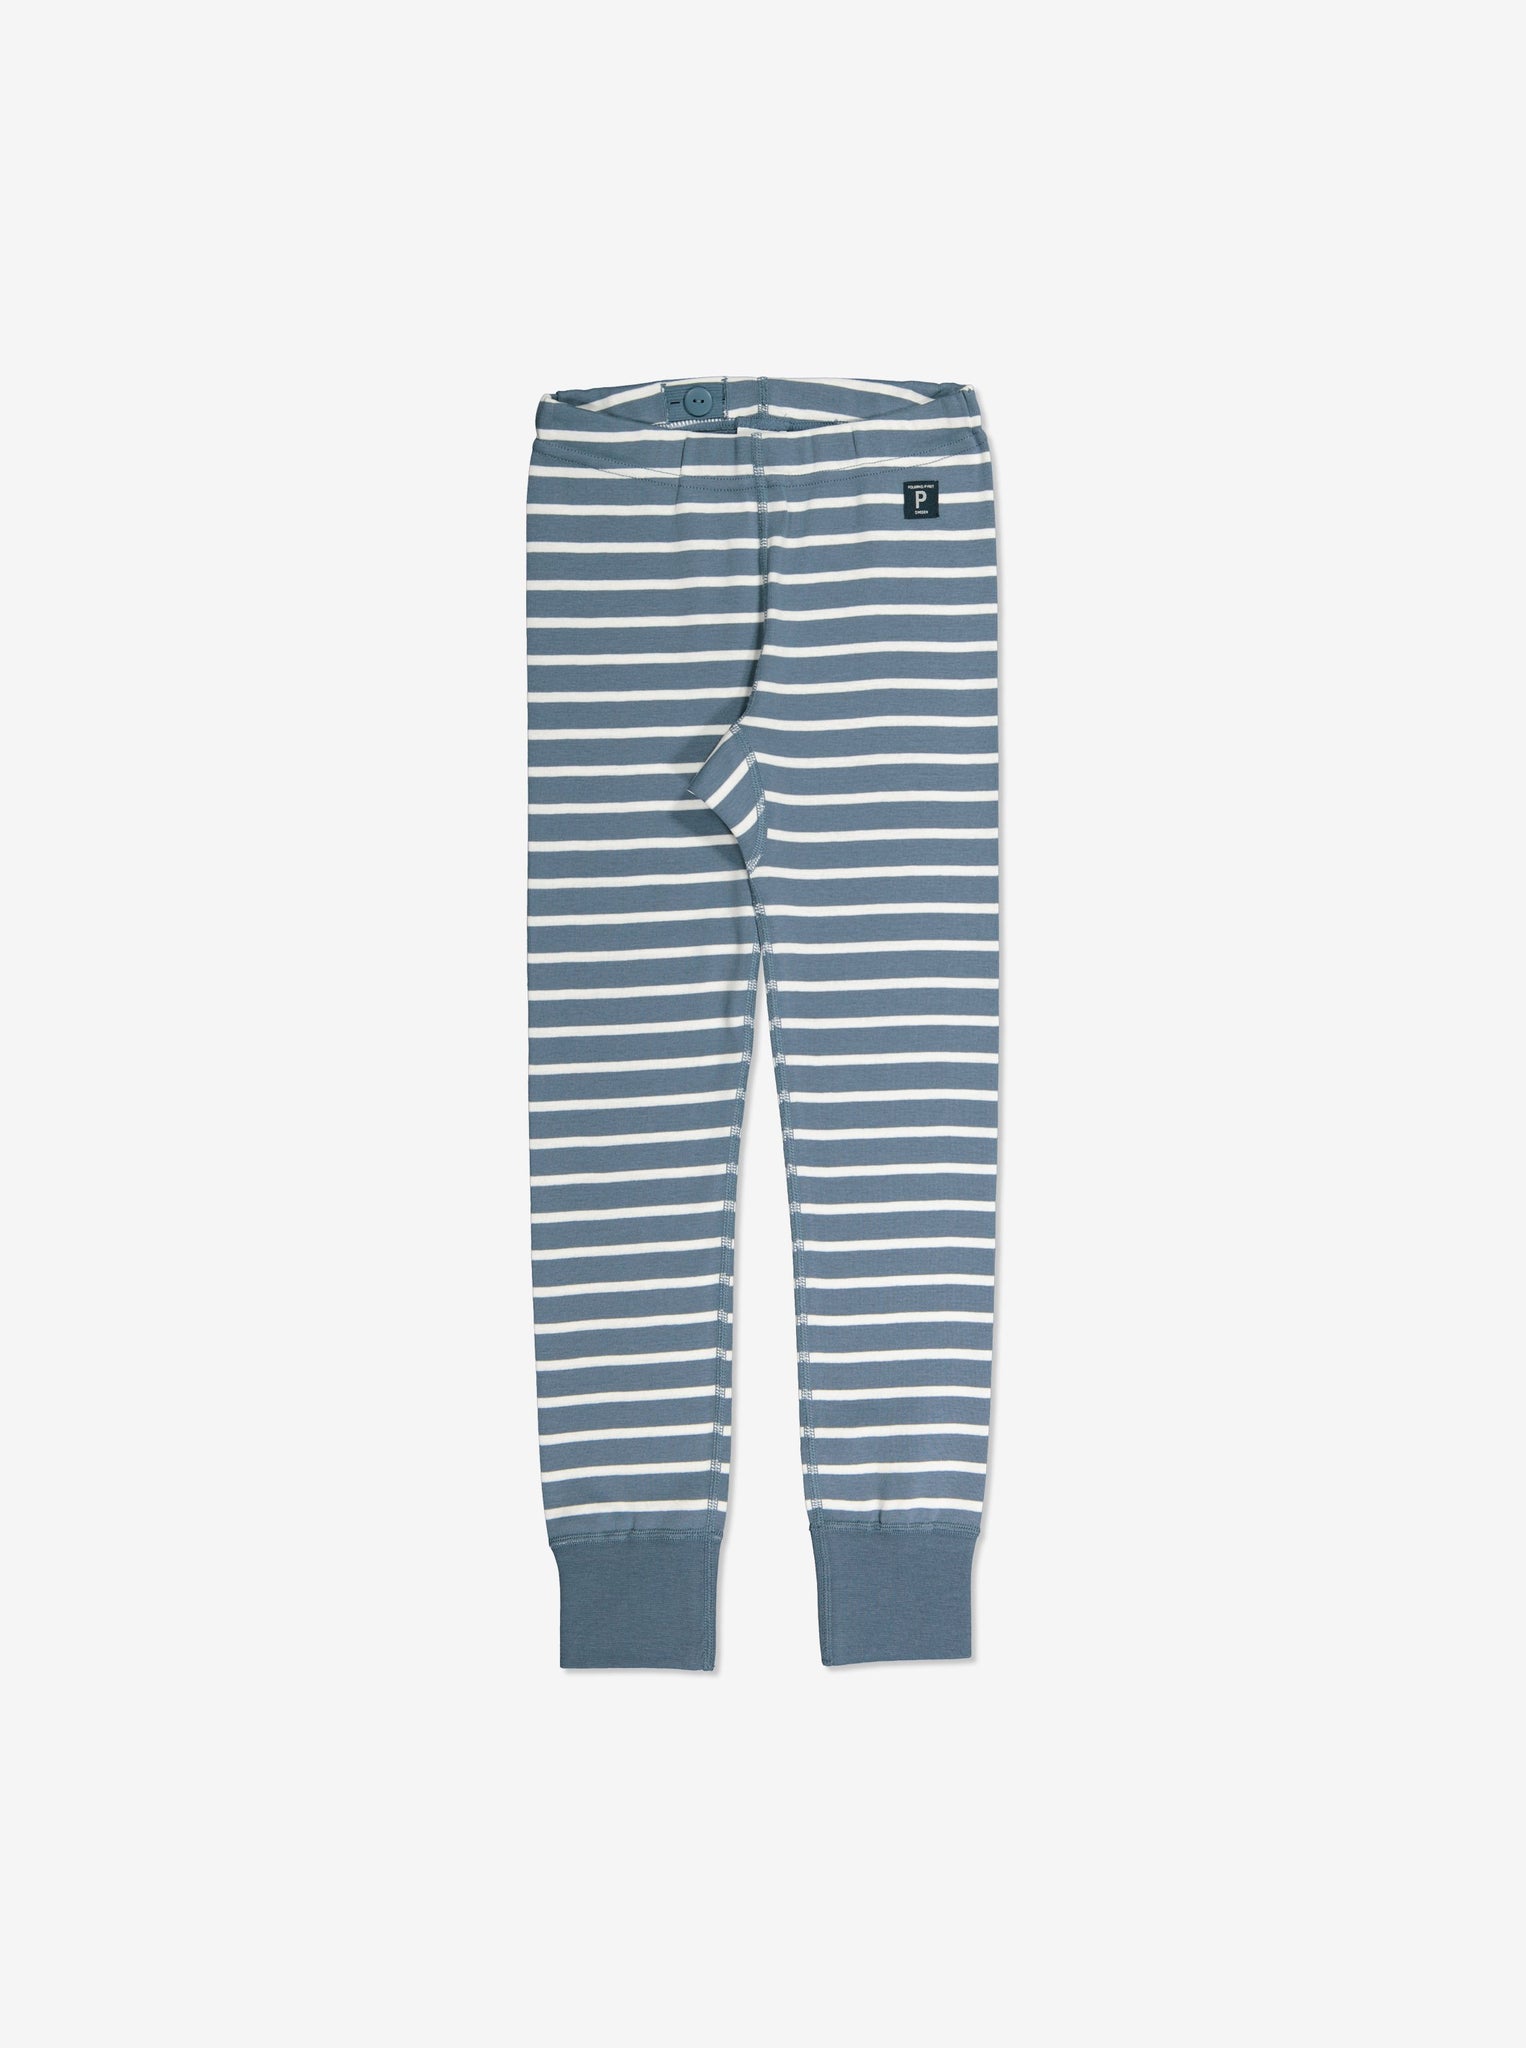  Organic Striped Blue Kids Leggings from Polarn O. Pyret Kidswear. Made with 100% organic cotton.